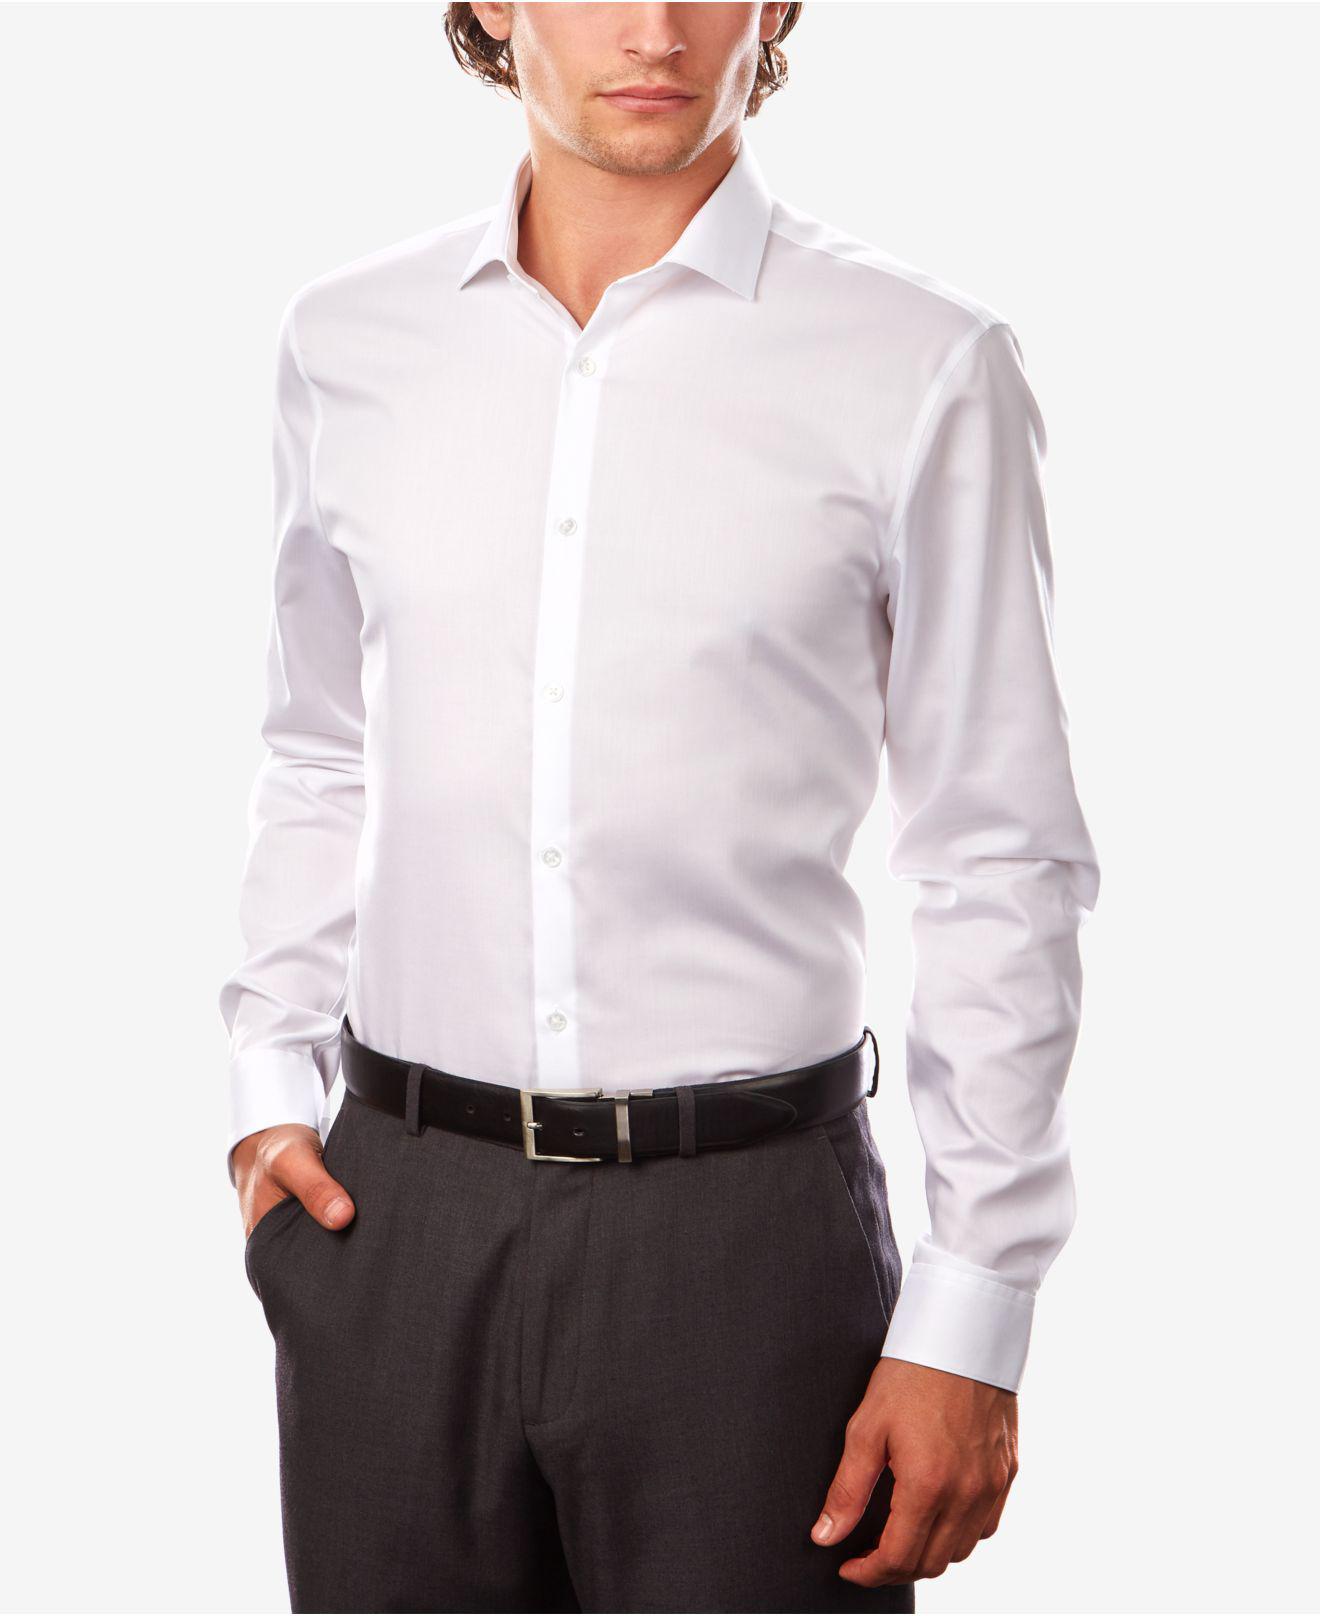 Introducir 42+ imagen calvin klein shirt extreme slim fit ...